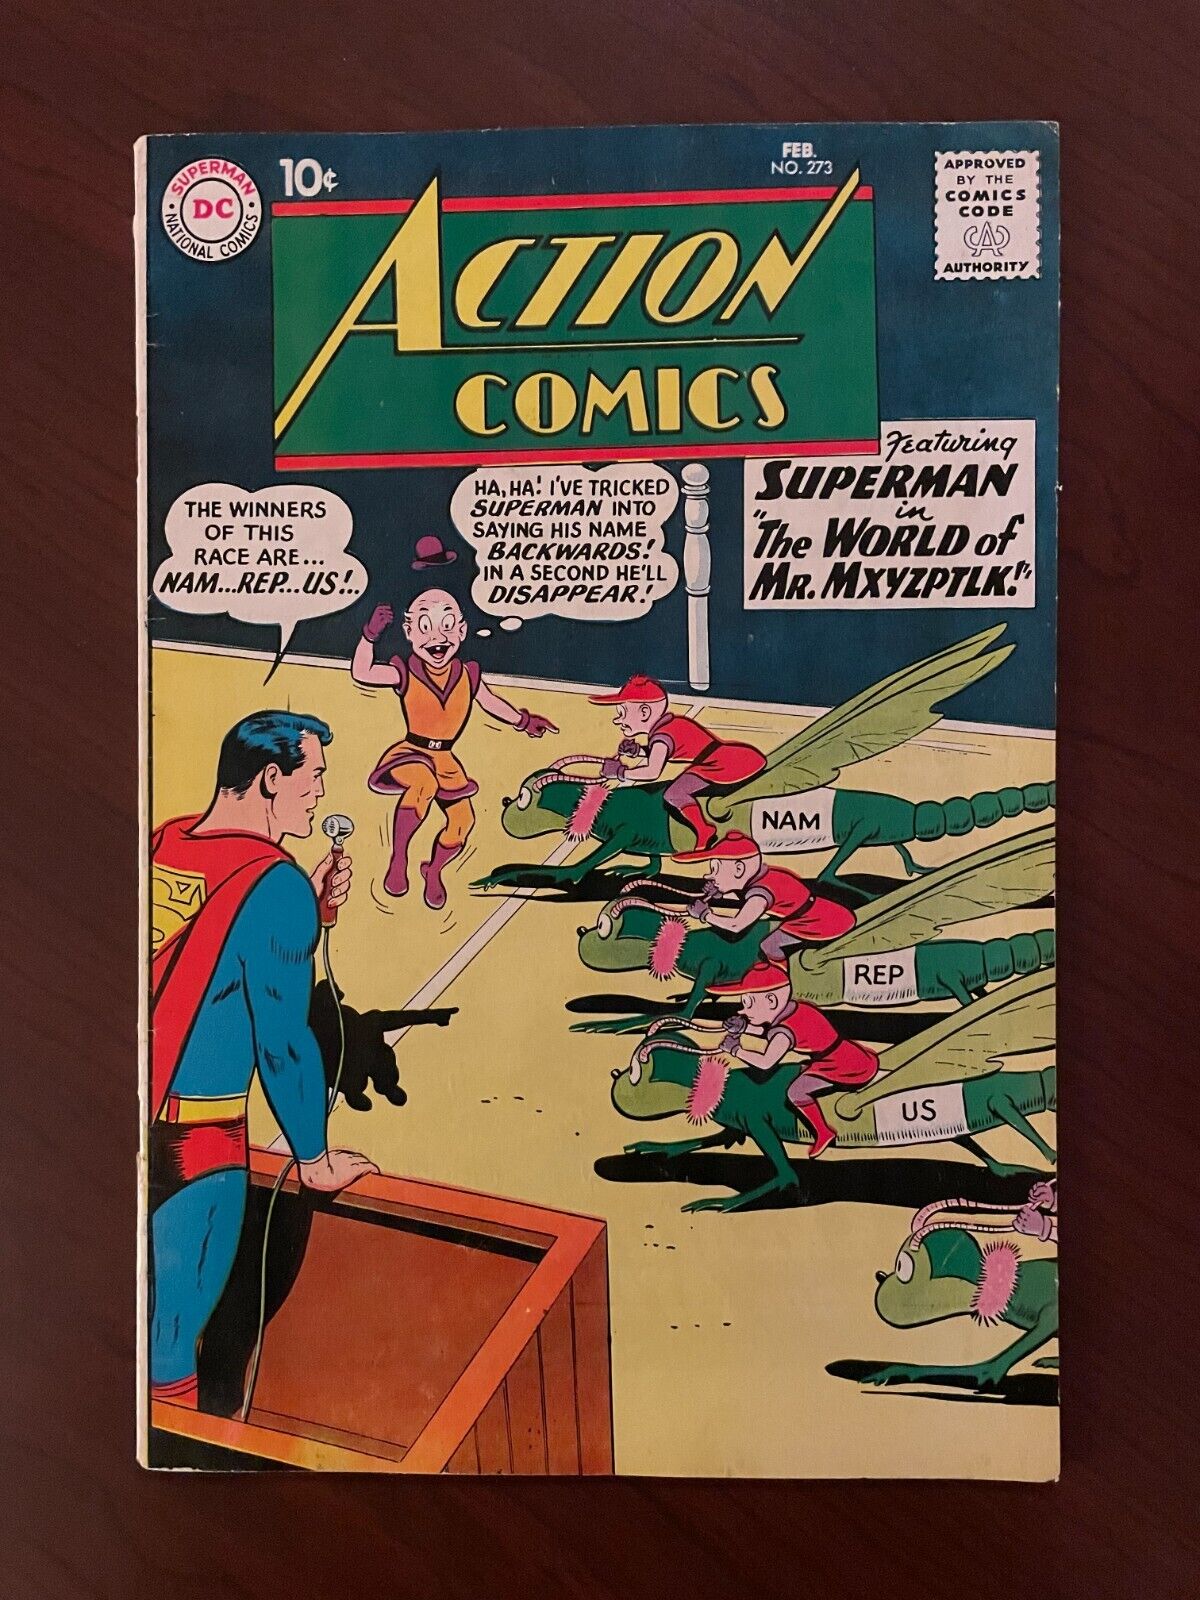 Action Comics #273 (DC Comics 1961) Silver Age Superman Mr. Mxyzptlk 7.0 F/VF